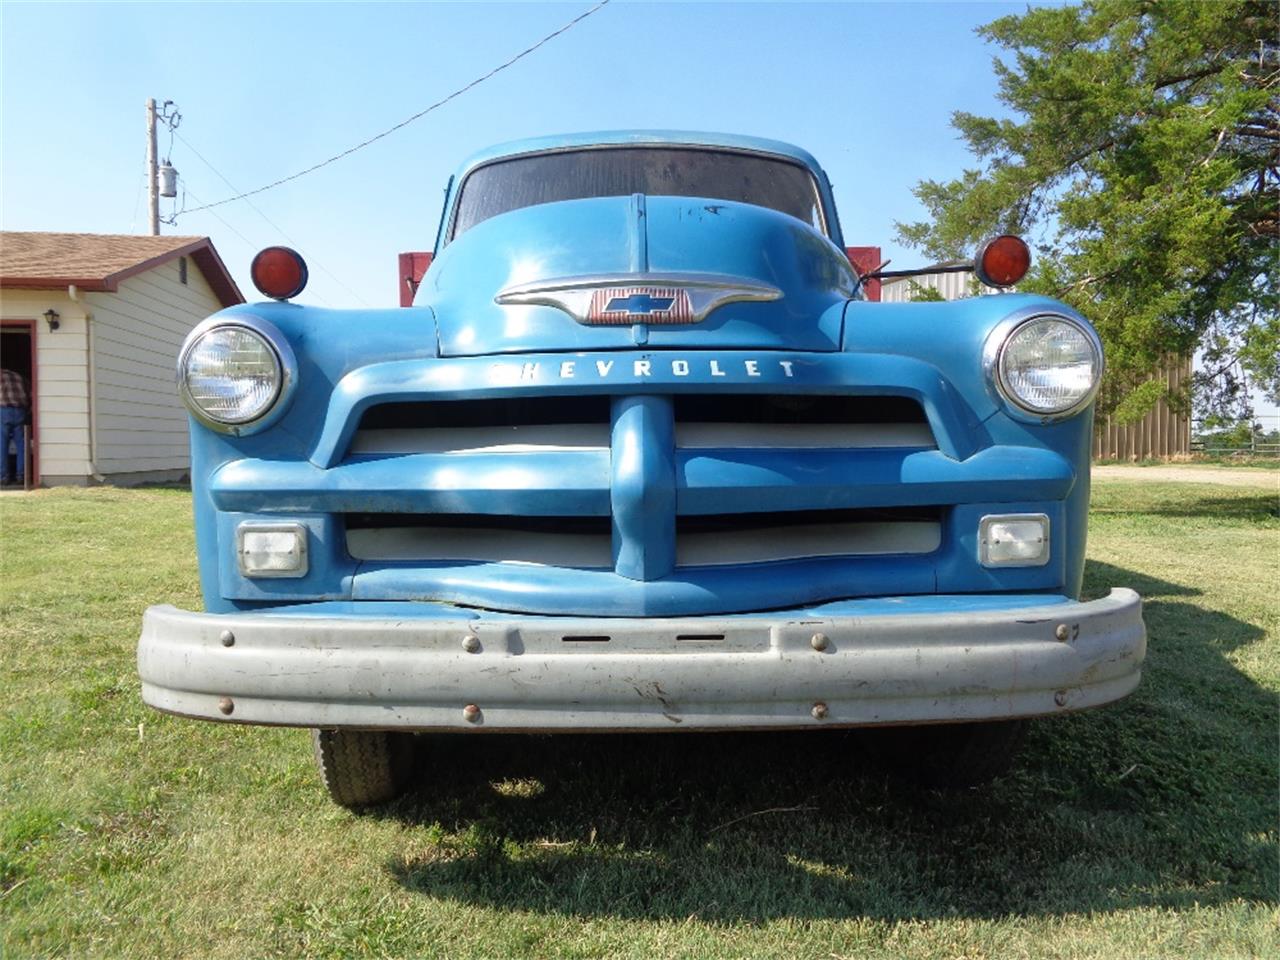 1954 Chevrolet 1 Ton Truck for Sale | ClassicCars.com | CC-1141289